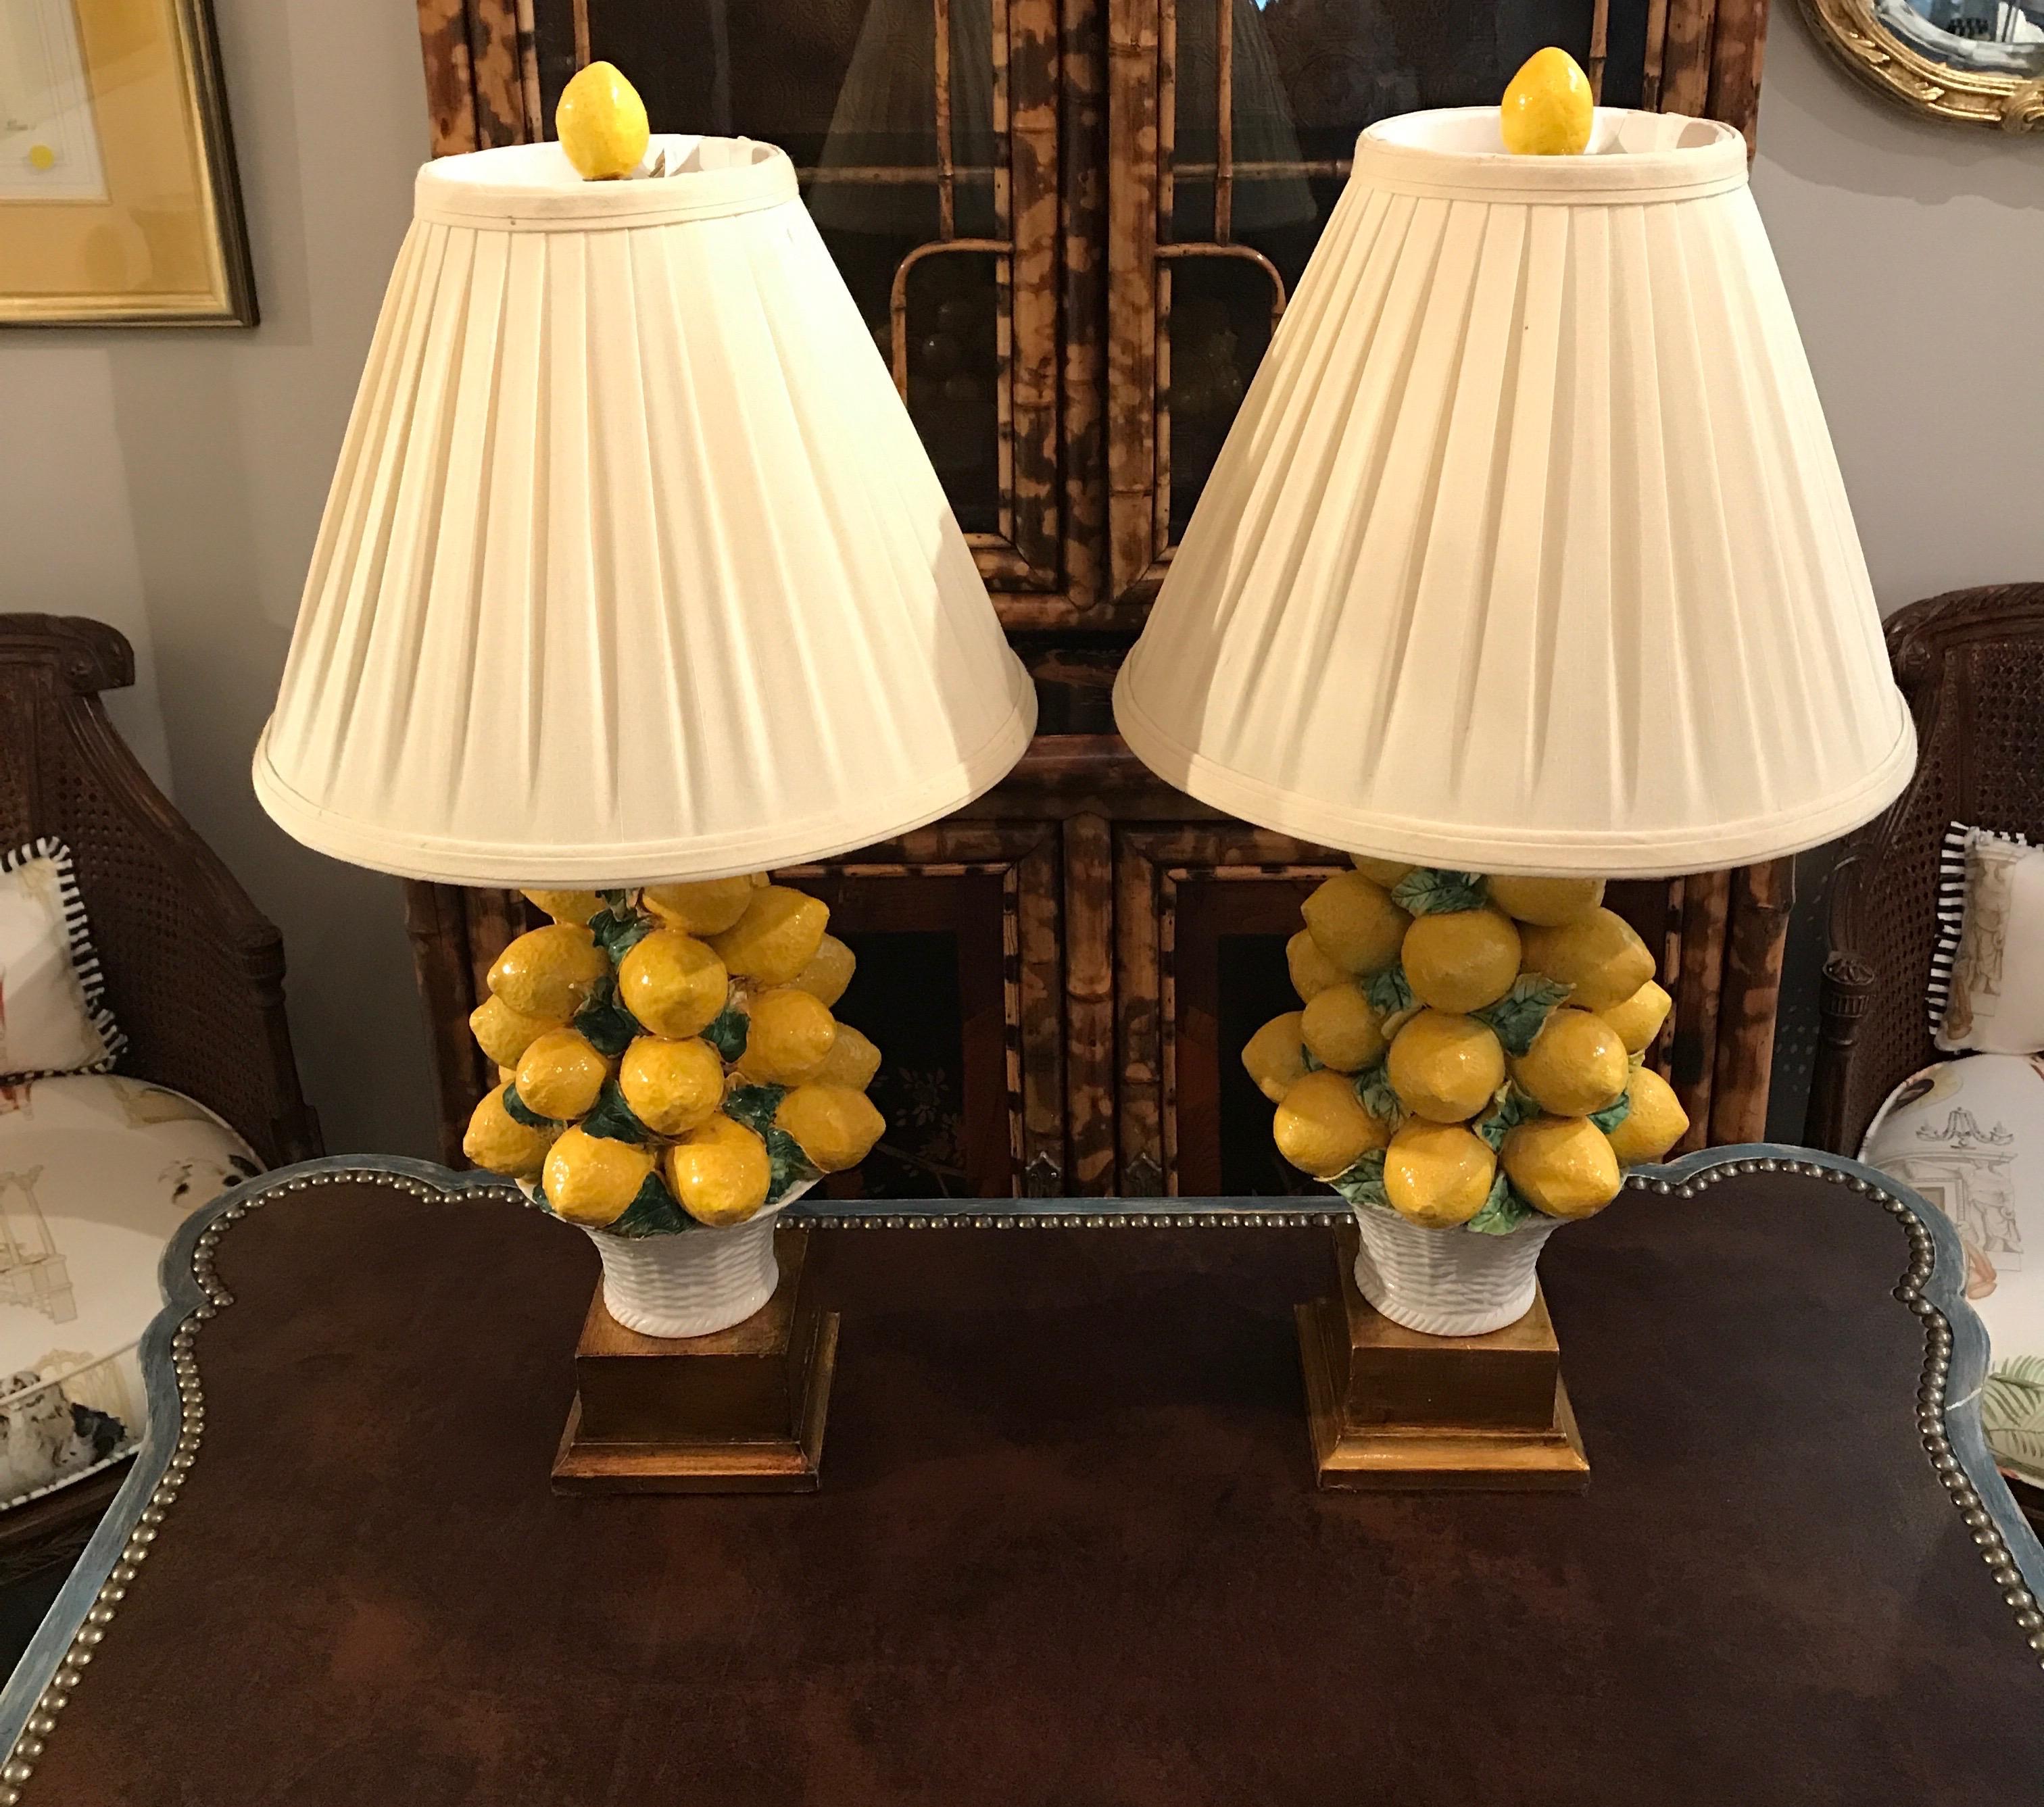 Pair of Italian lemon topiary lamps with shades and matching lemon finials.